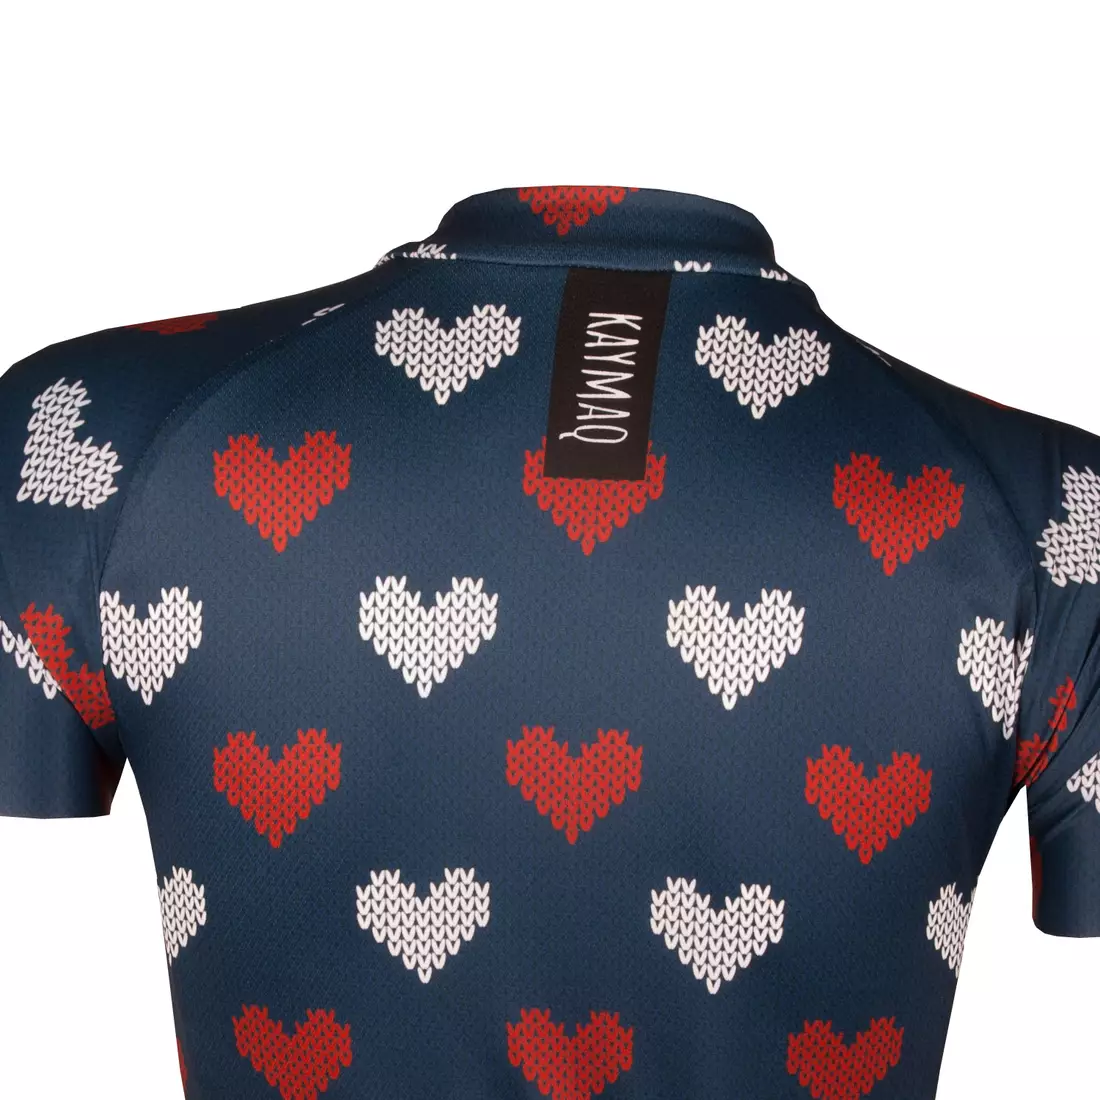 KAYMAQ DESIGN W31 Women's cycling short sleeve jersey